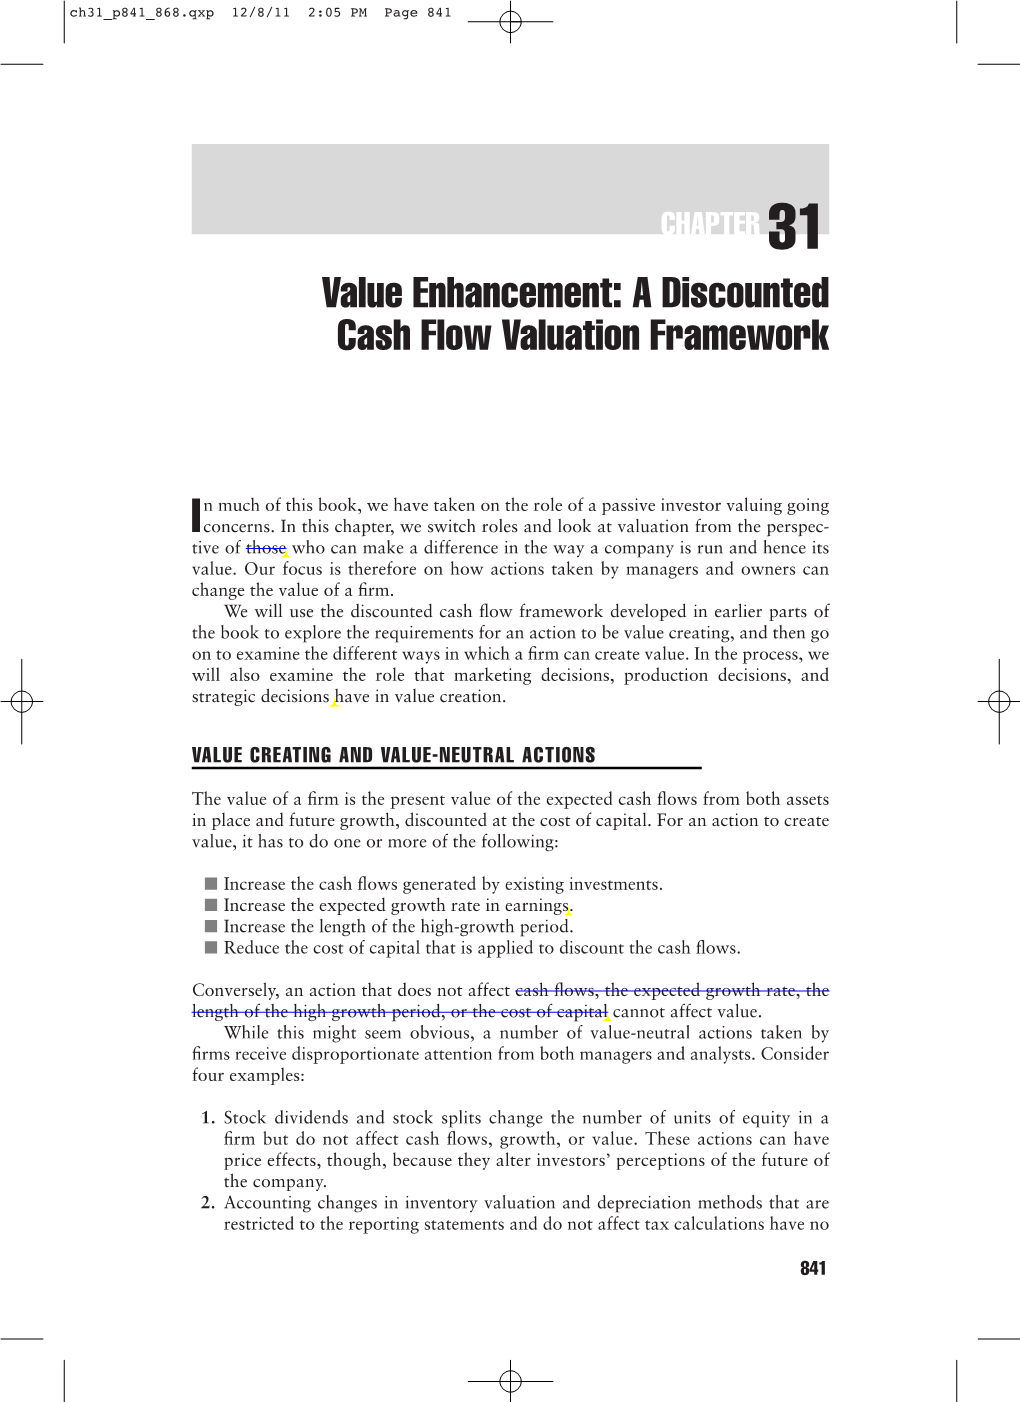 Value Enhancement: a Discounted Cash Flow Valuation Framework